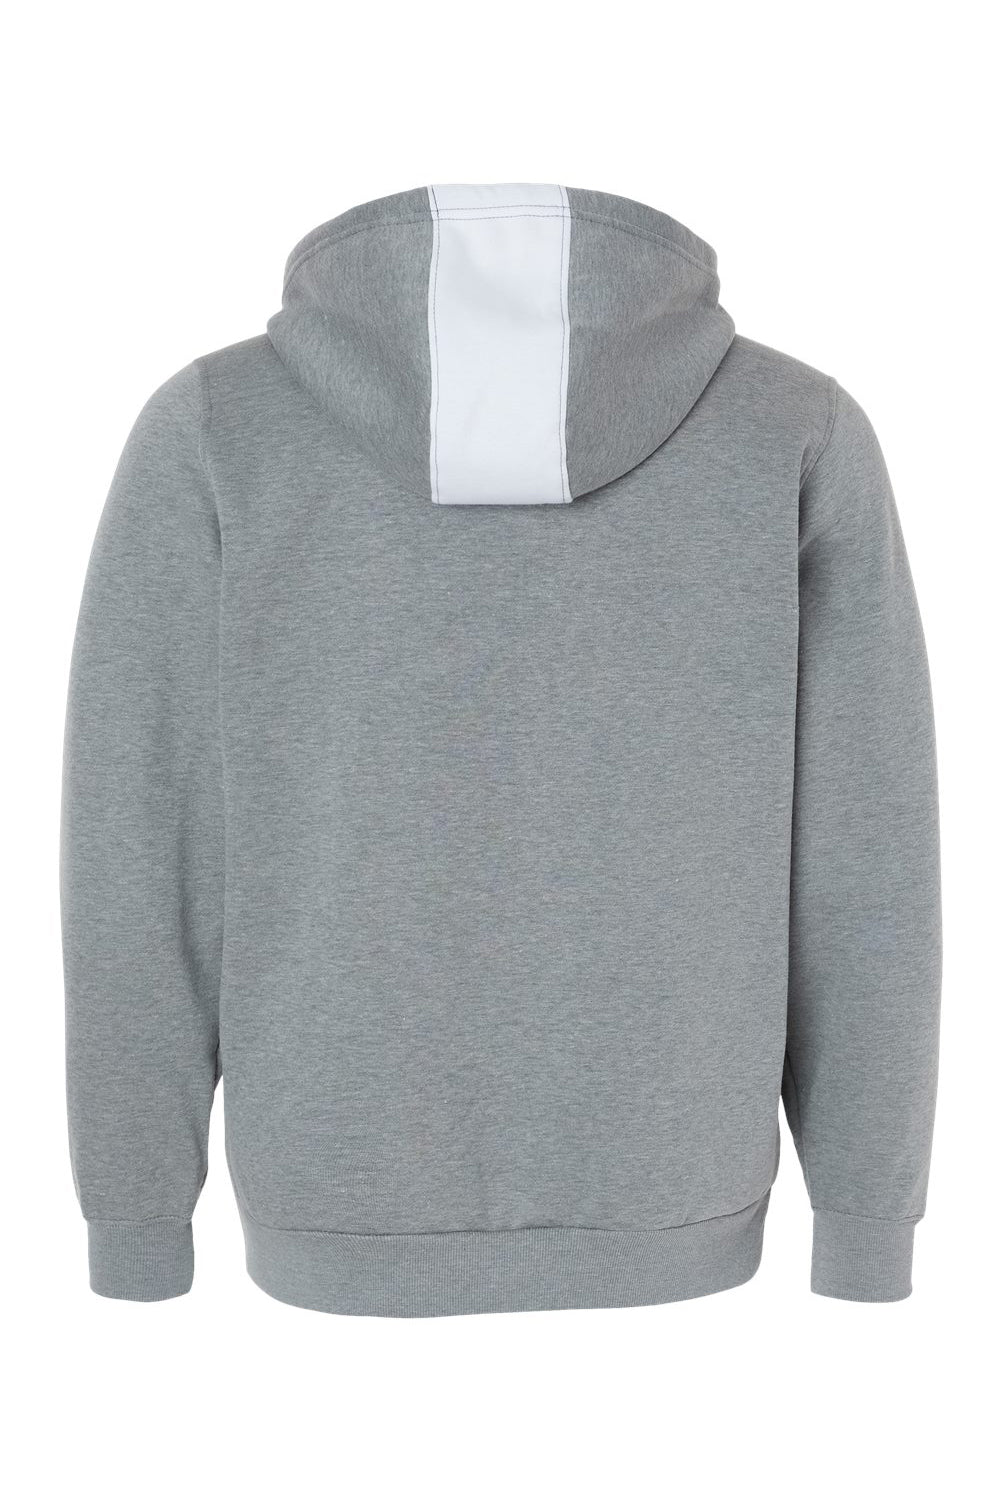 Augusta Sportswear 6865 Mens Eco Revive 3 Season Fleece Hooded Sweatshirt Hoodie White/Heather Grey Flat Back